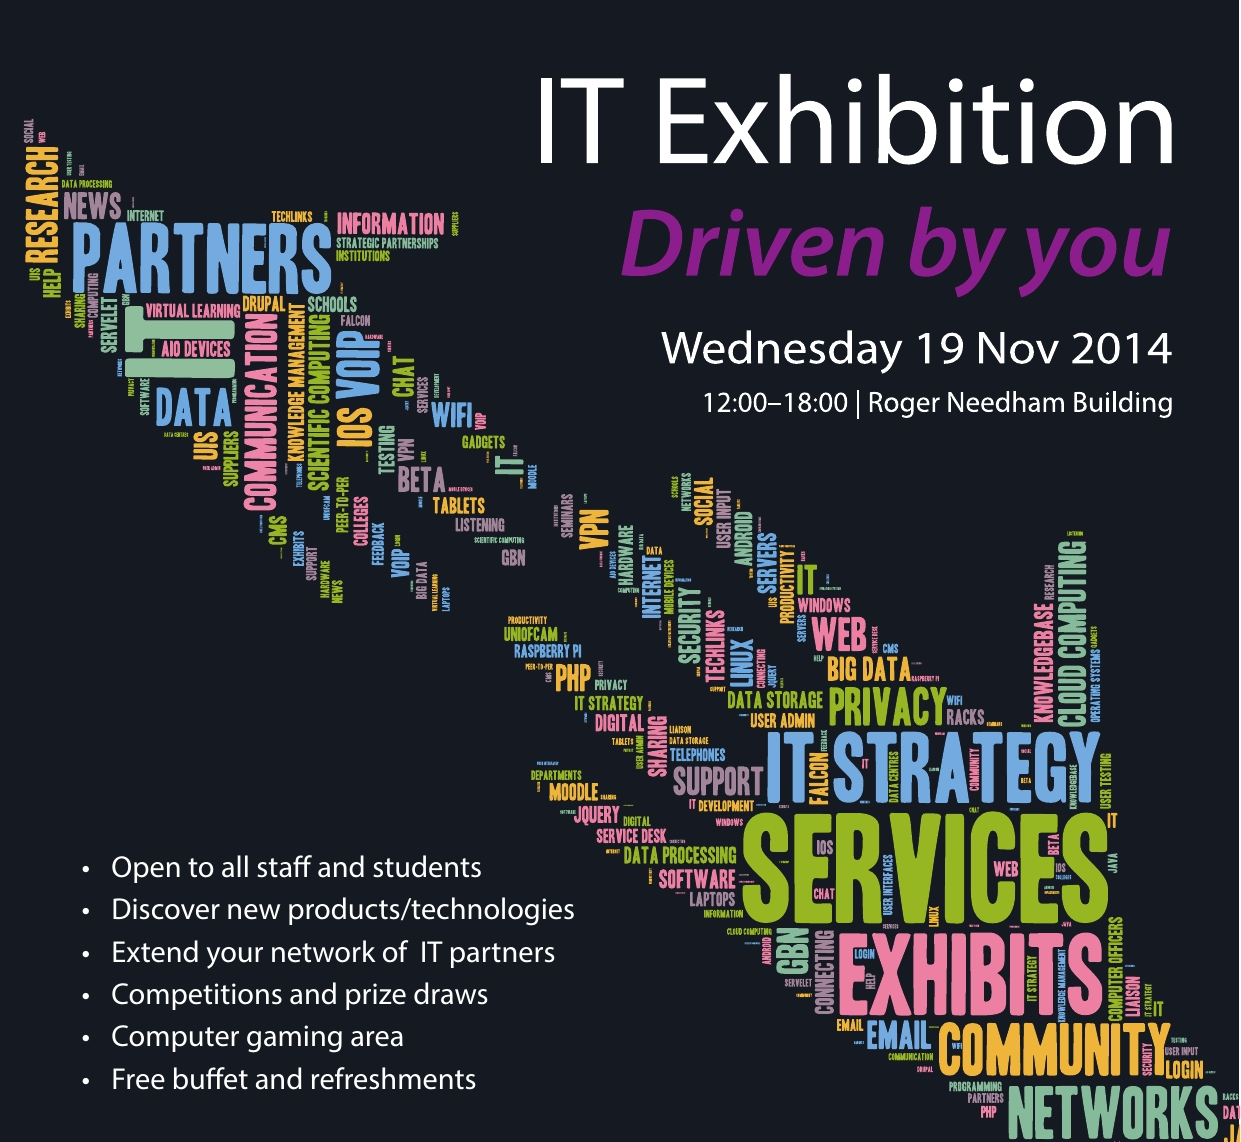 IT Exhibition 2014's image